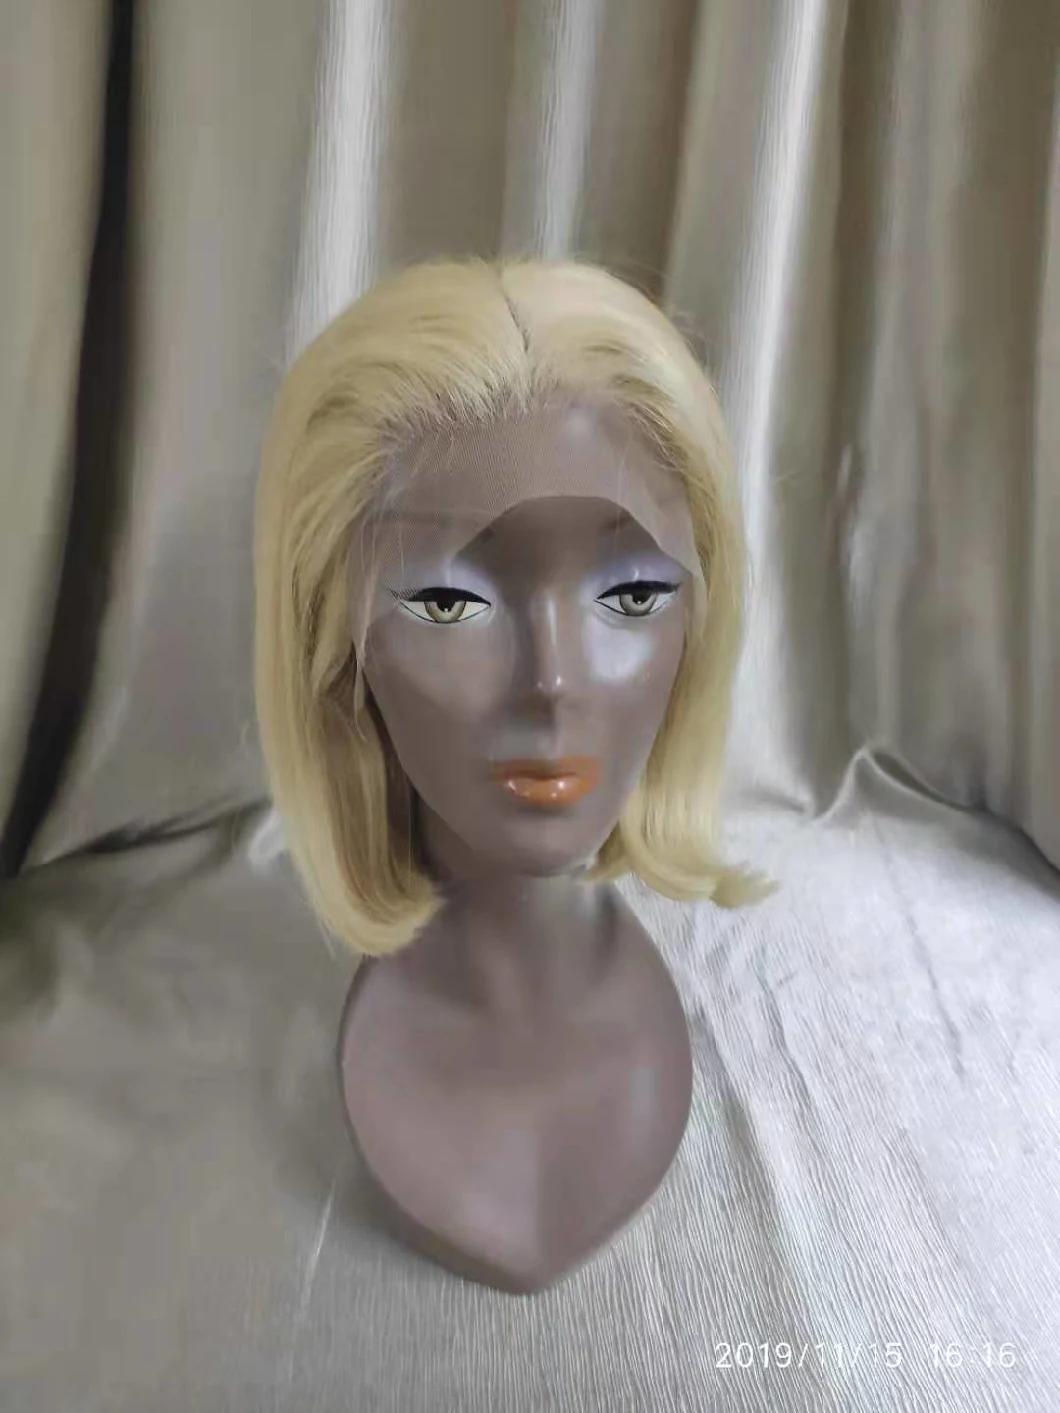 Hot Sale 613 Blonde Mink Brazilian Human Hair Lace Wig Bob Wigs